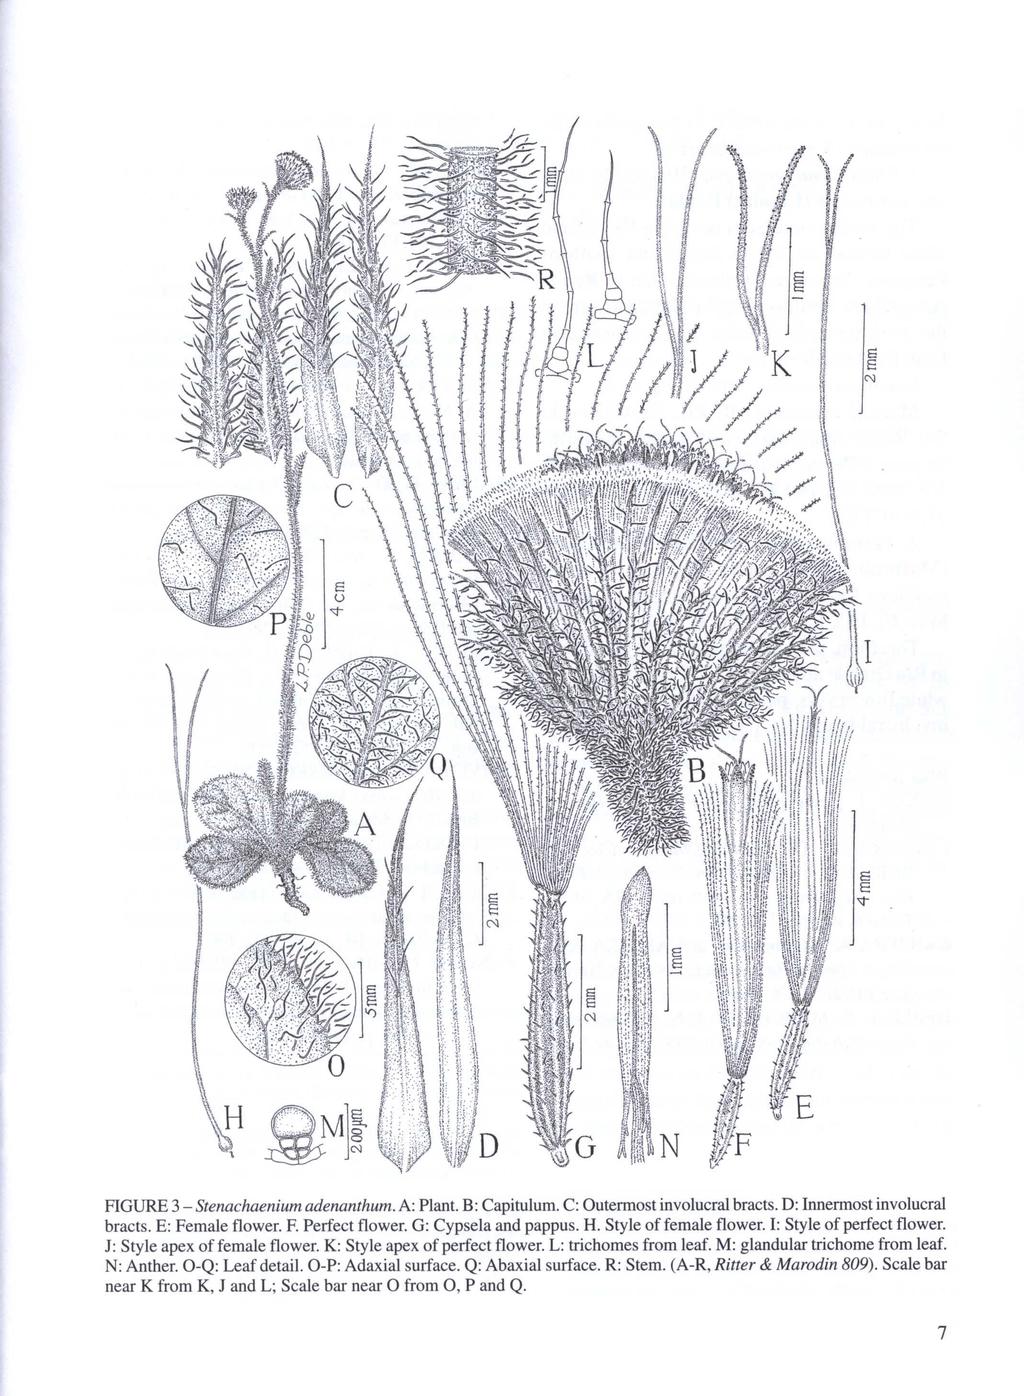 FIGURE 3 - Stenachaenium adenanthum. A: Planto B: Capitulum. C: Outennost involucral bracts. D: Innennost involucral bracts. E: Female flower. F. Perfect flower. G: Cypsela and pappus. H.